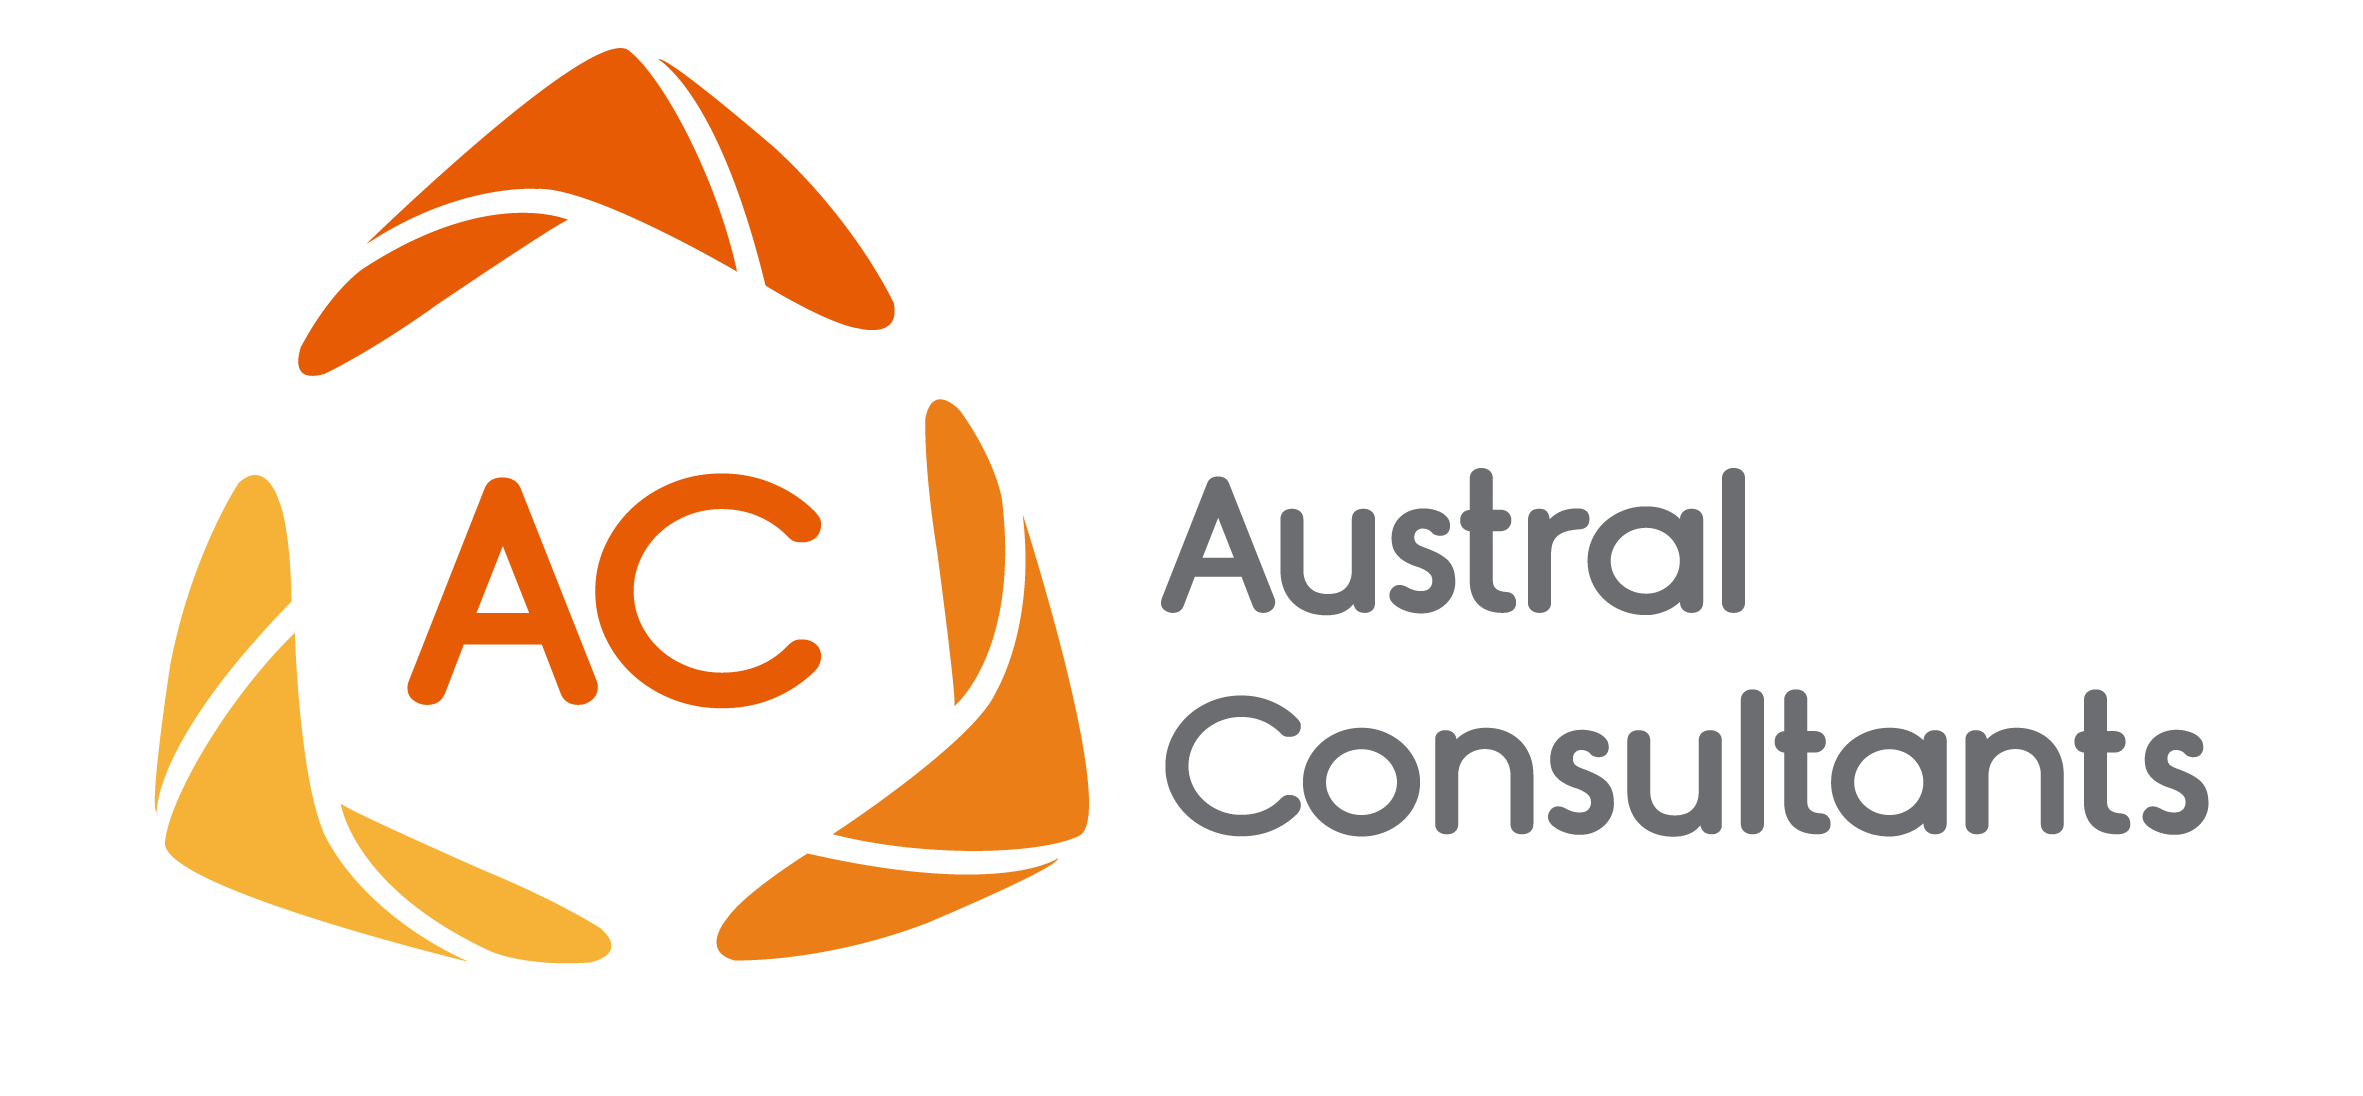 Austral Consultants